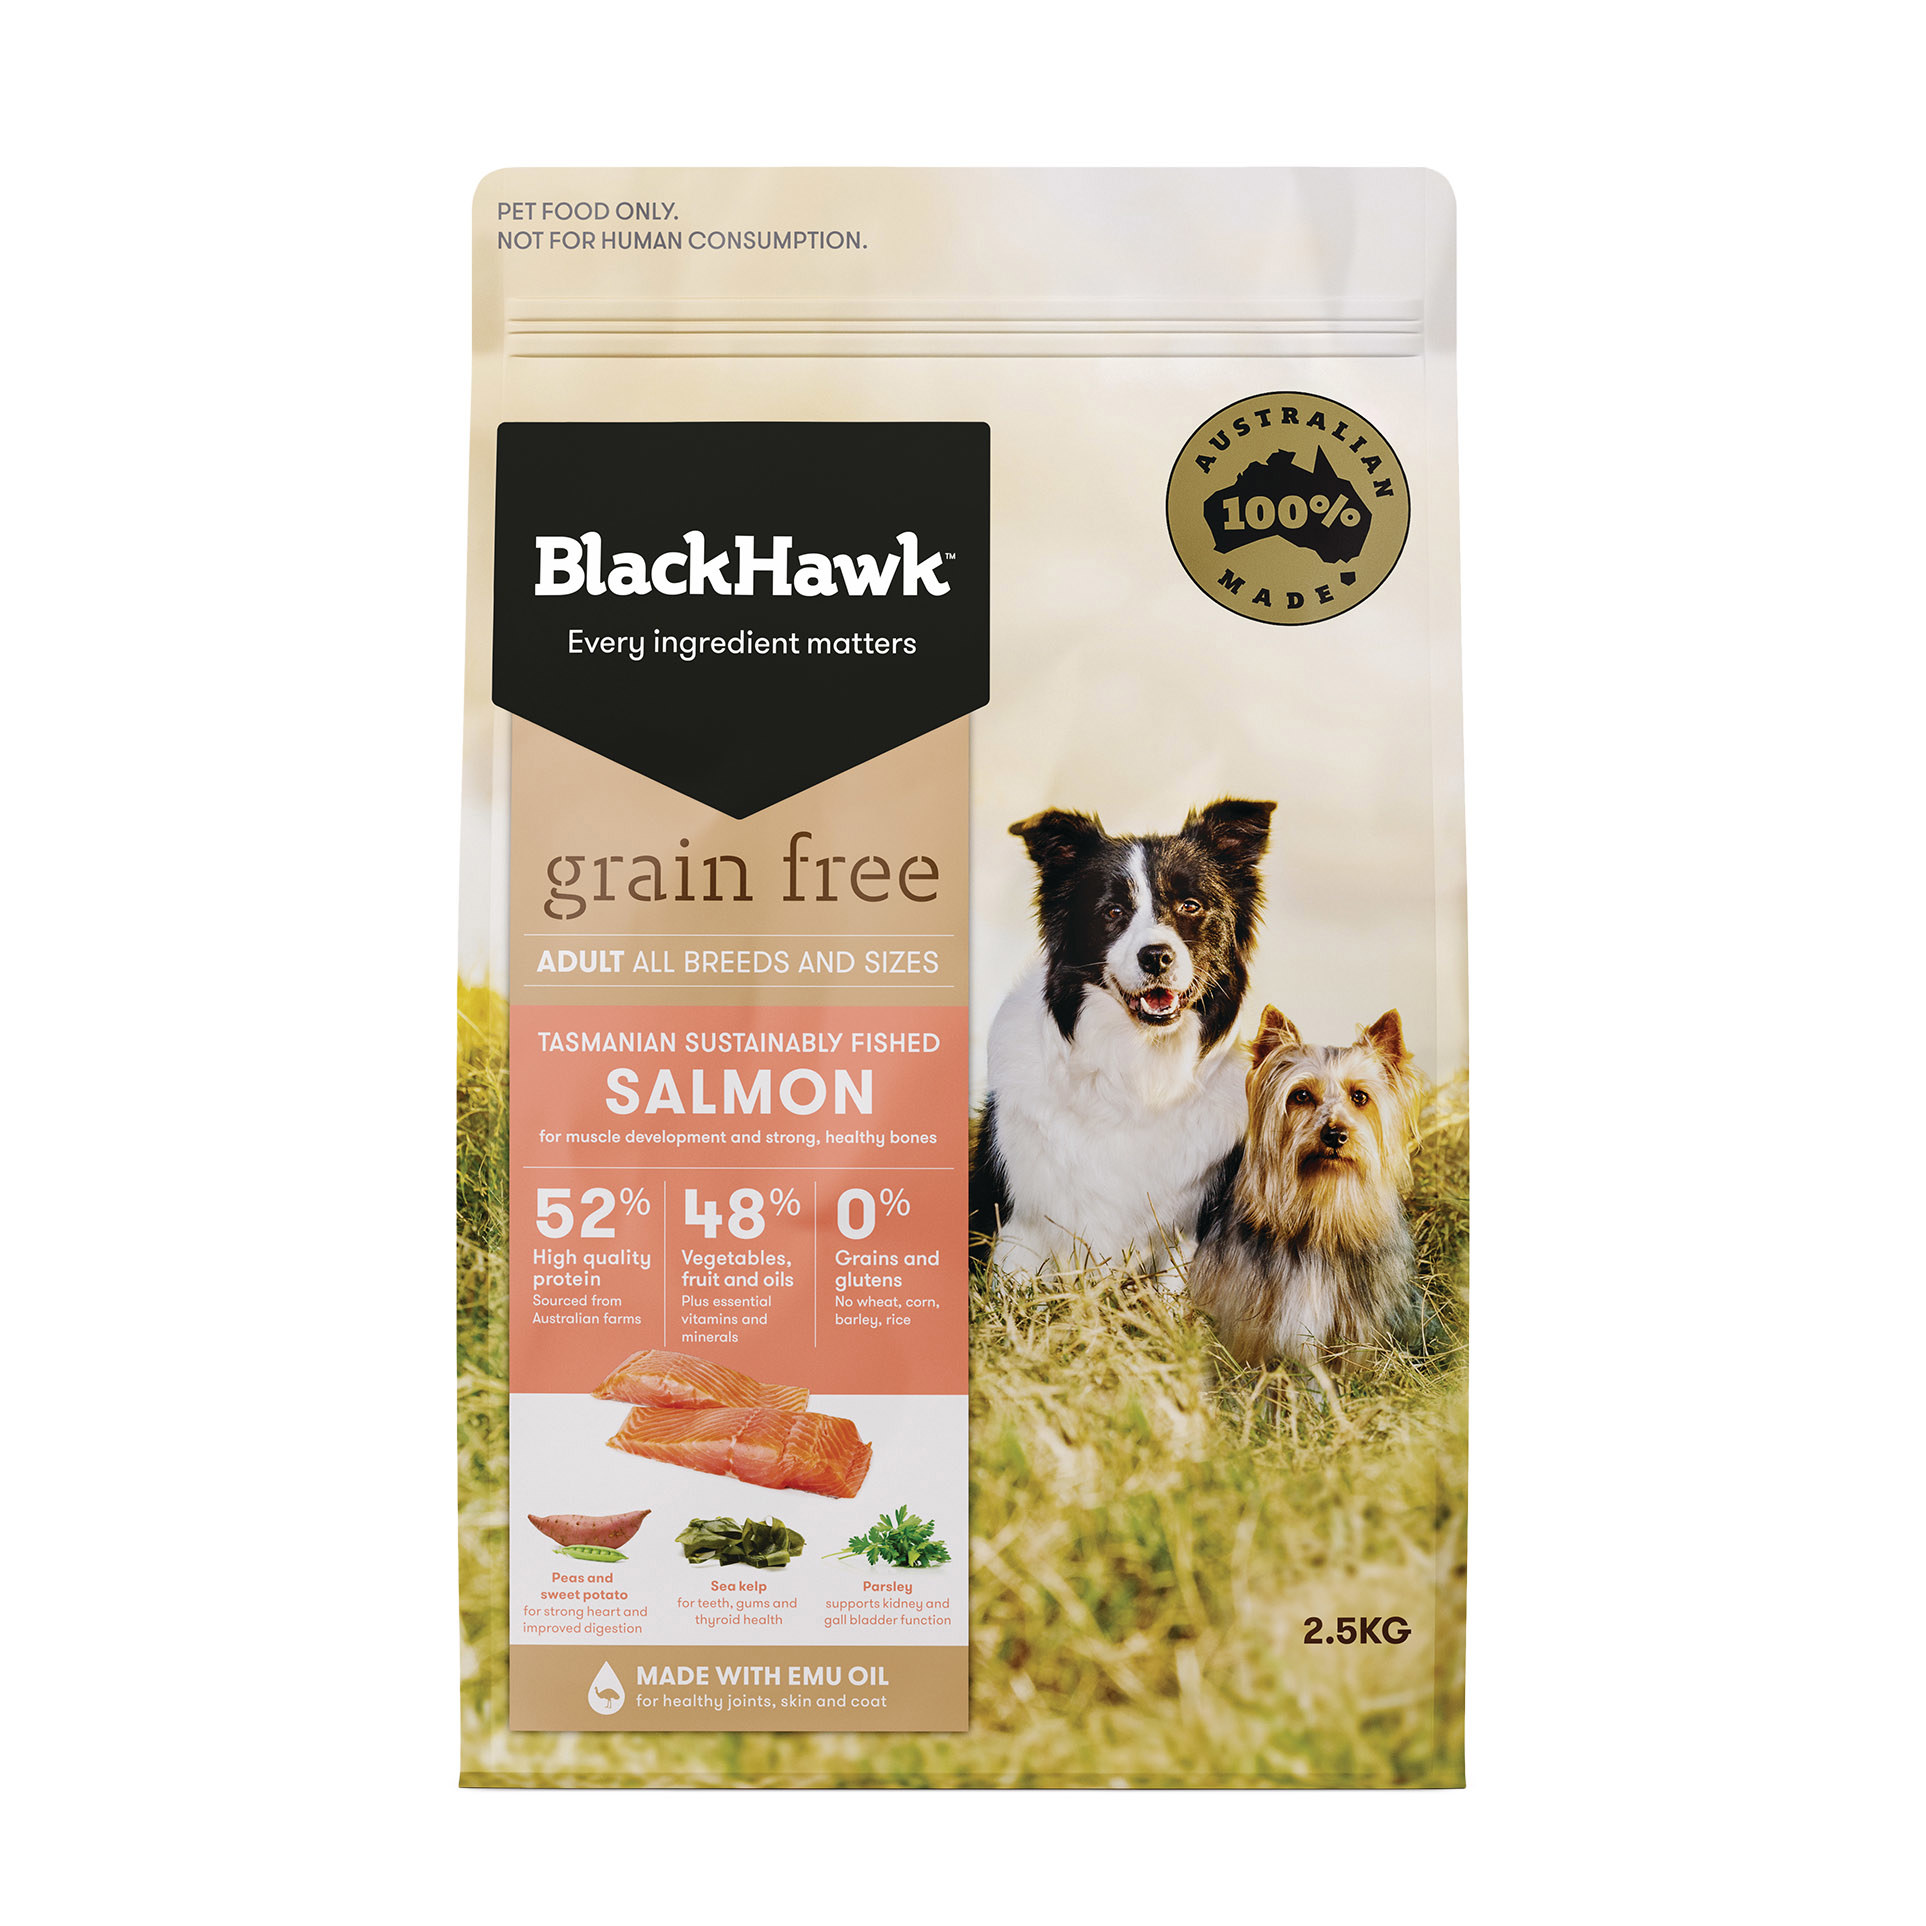 Grain Free Dog Food - Salmon